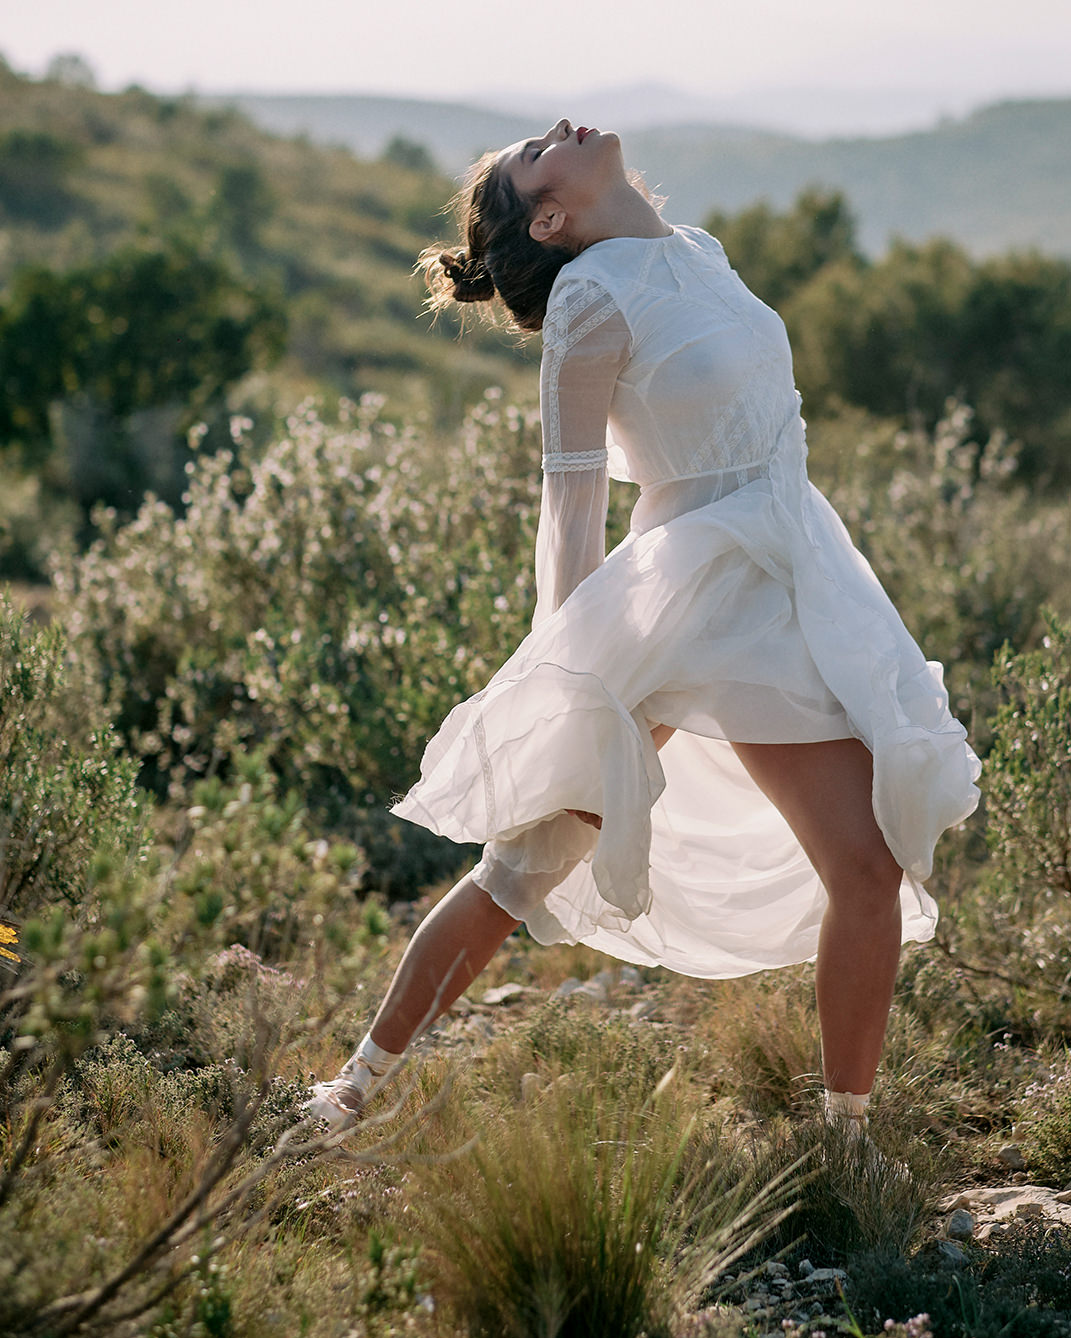 editorial modelo bailarina vestido de novia en parque natural